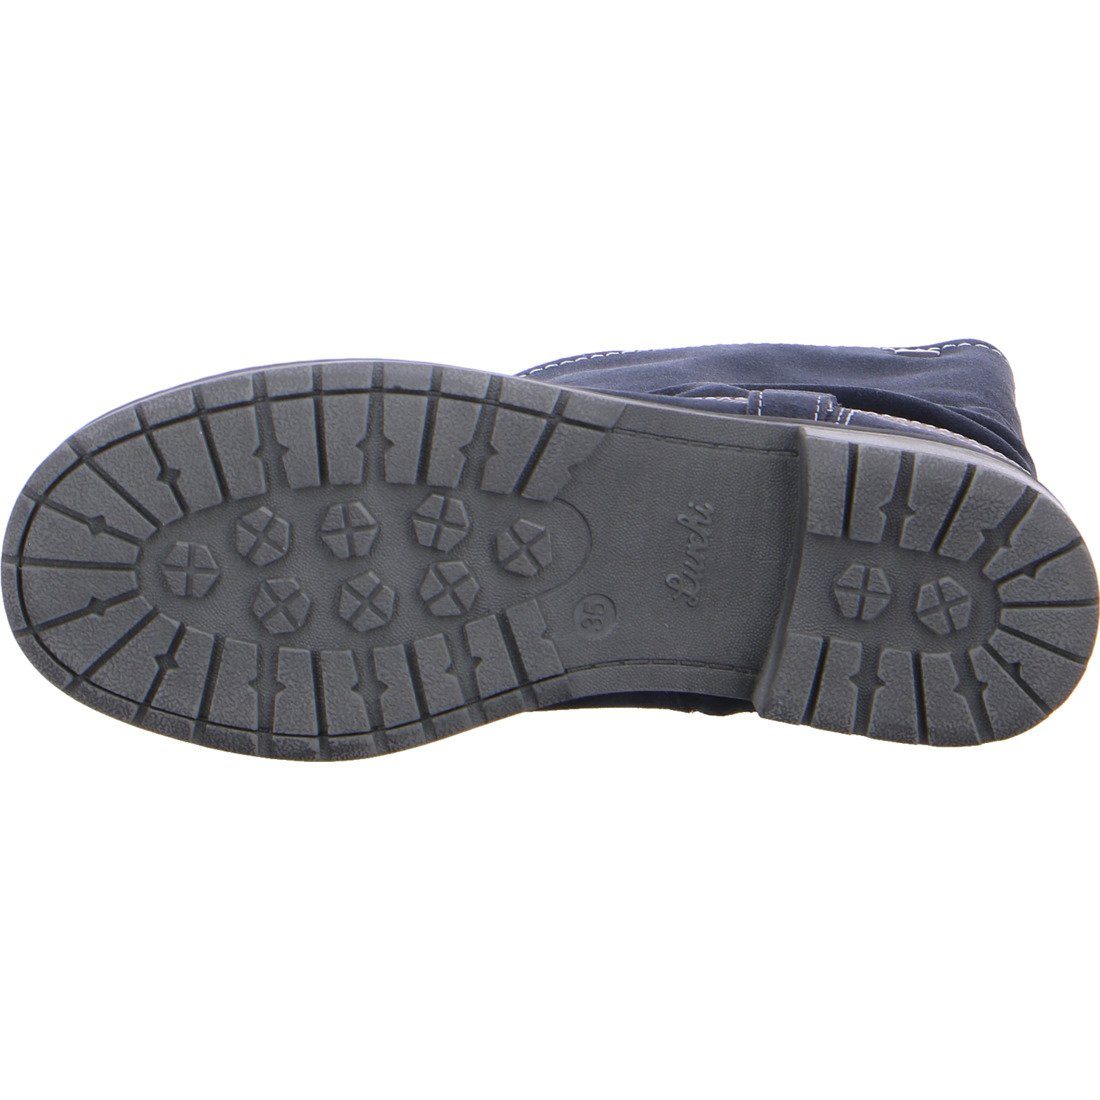 Schuhe, Lurchi 044032 Lia-Tex Stiefel Lurchi blau Stiefel - Rauleder